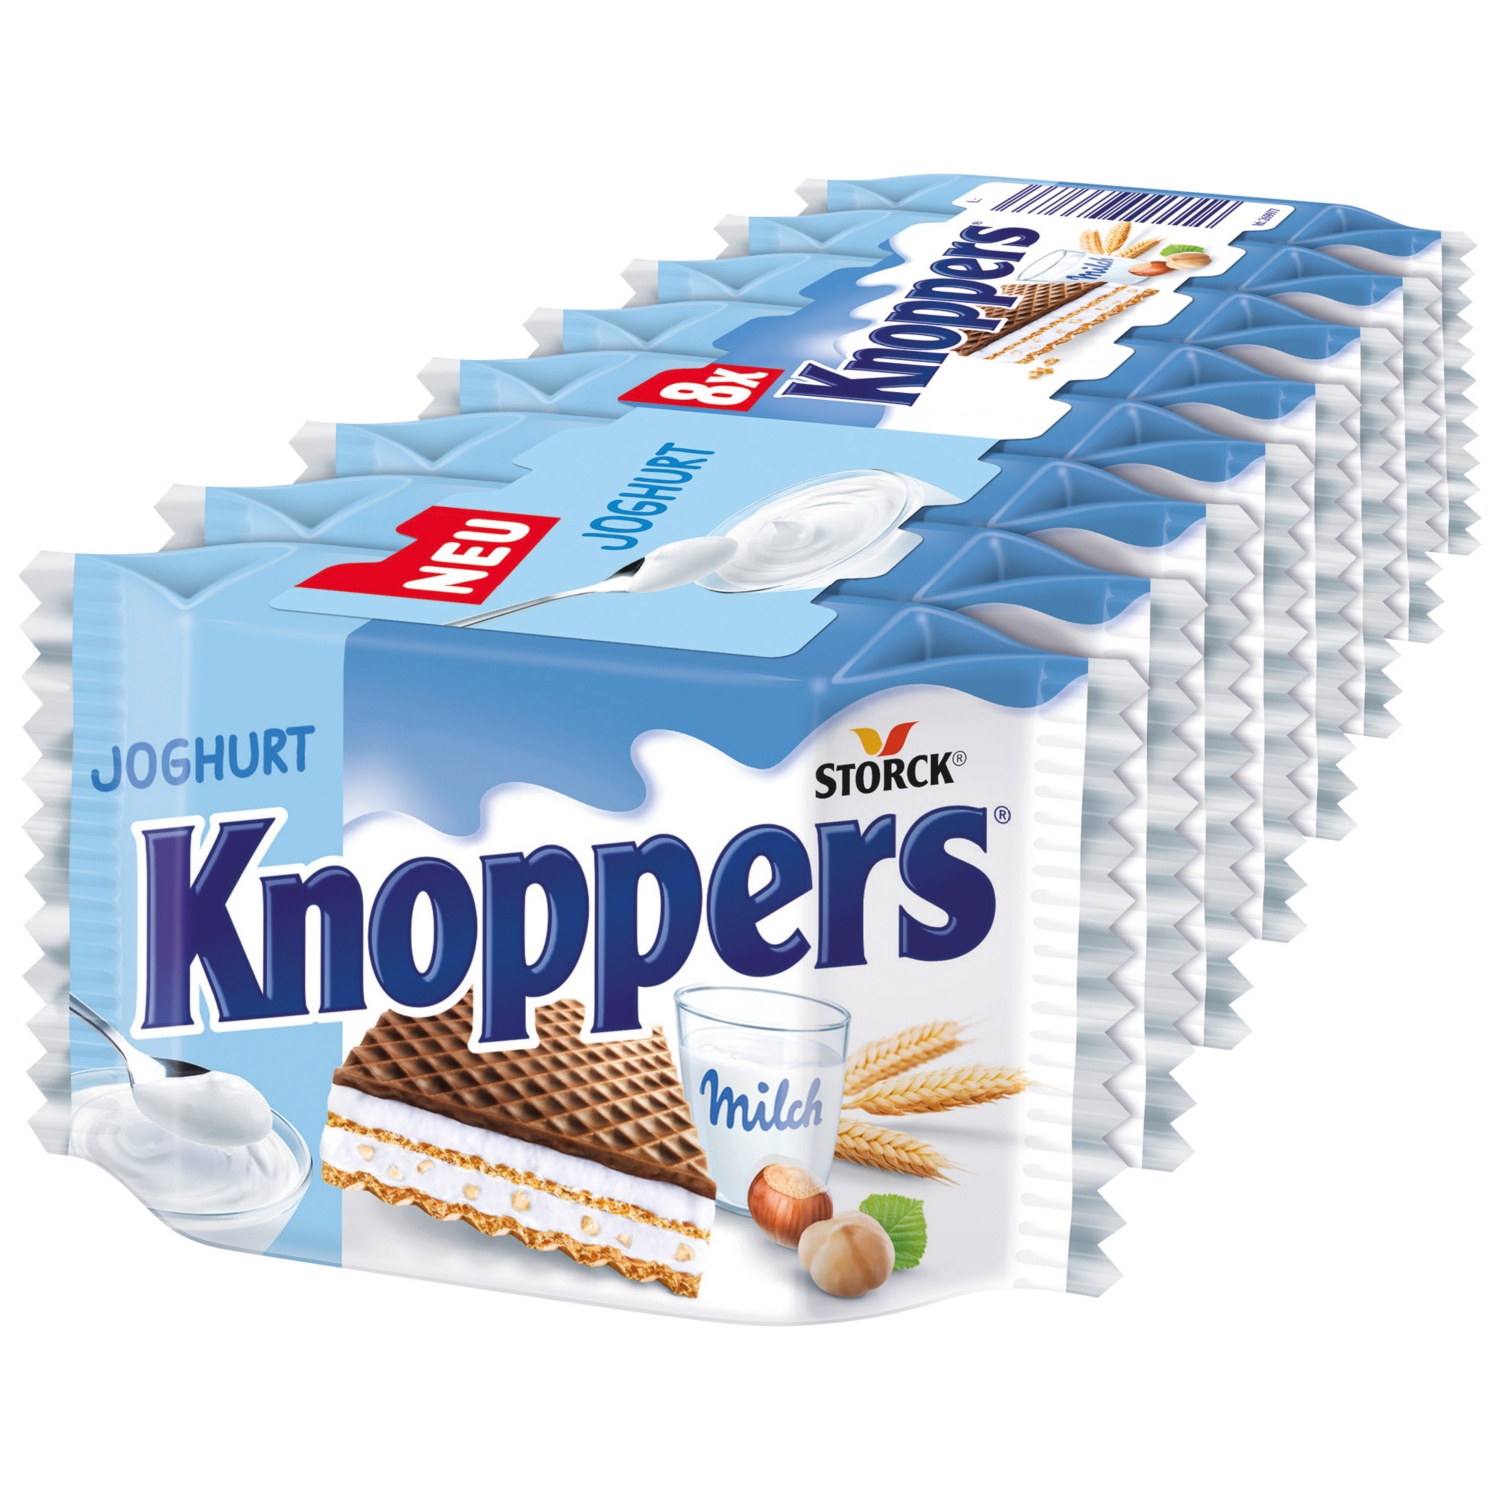 STORCK Knoppers barretta di cialda, yogurt